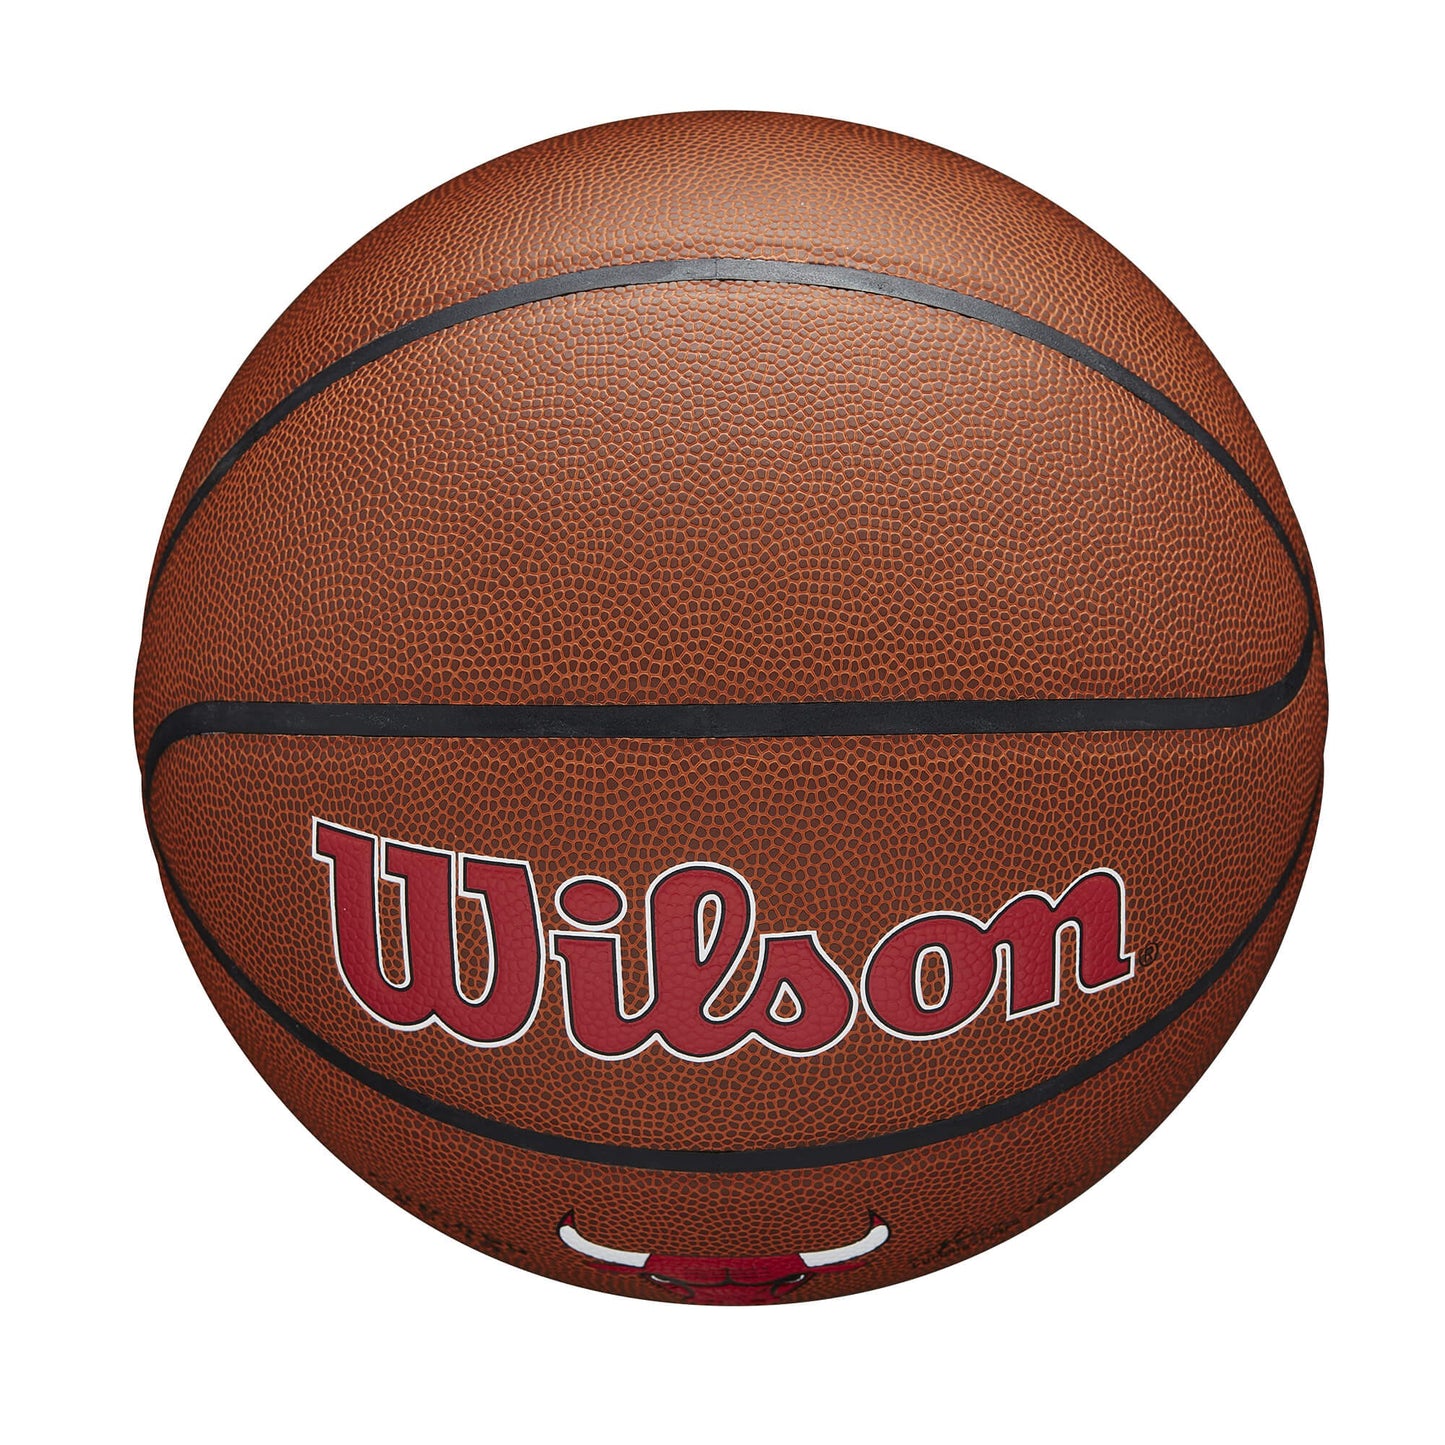 Wilson NBA Team Alliance Composite Basketball Chicago Bulls (sz. 7)